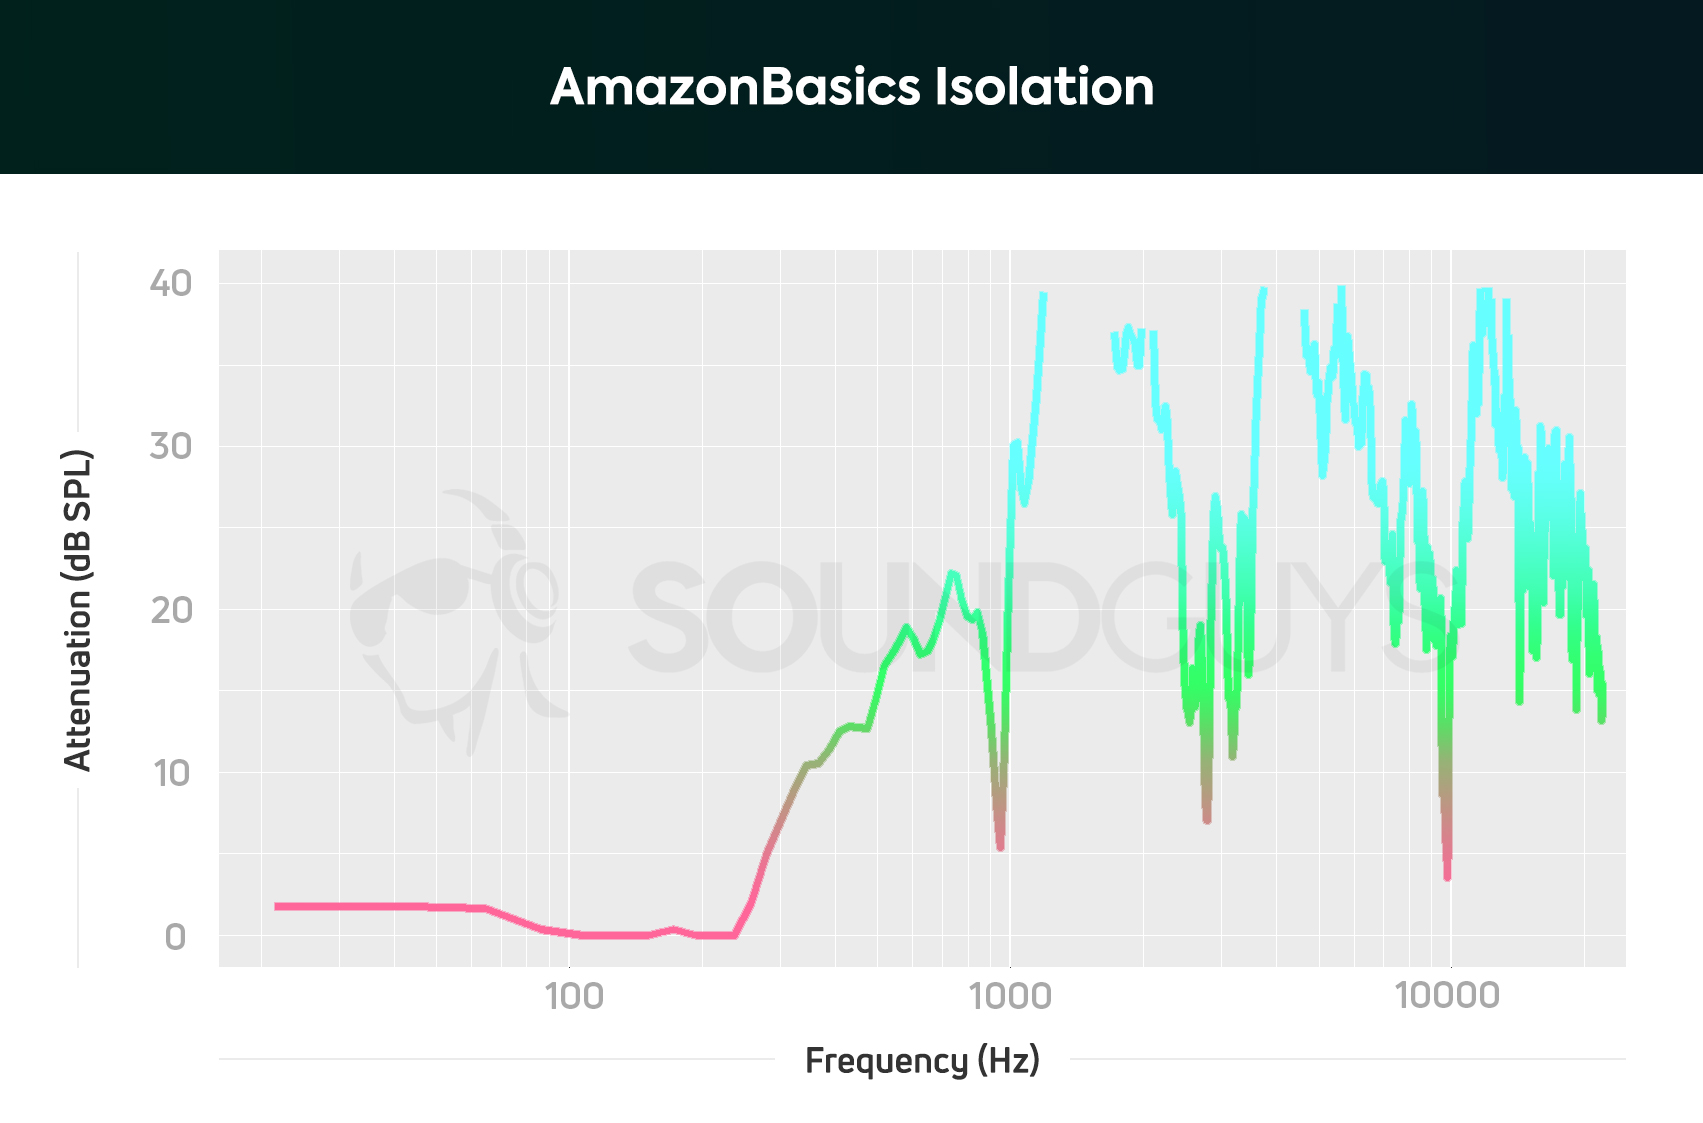 An isolation chart of the AmazonBasics kids' hearing protection.